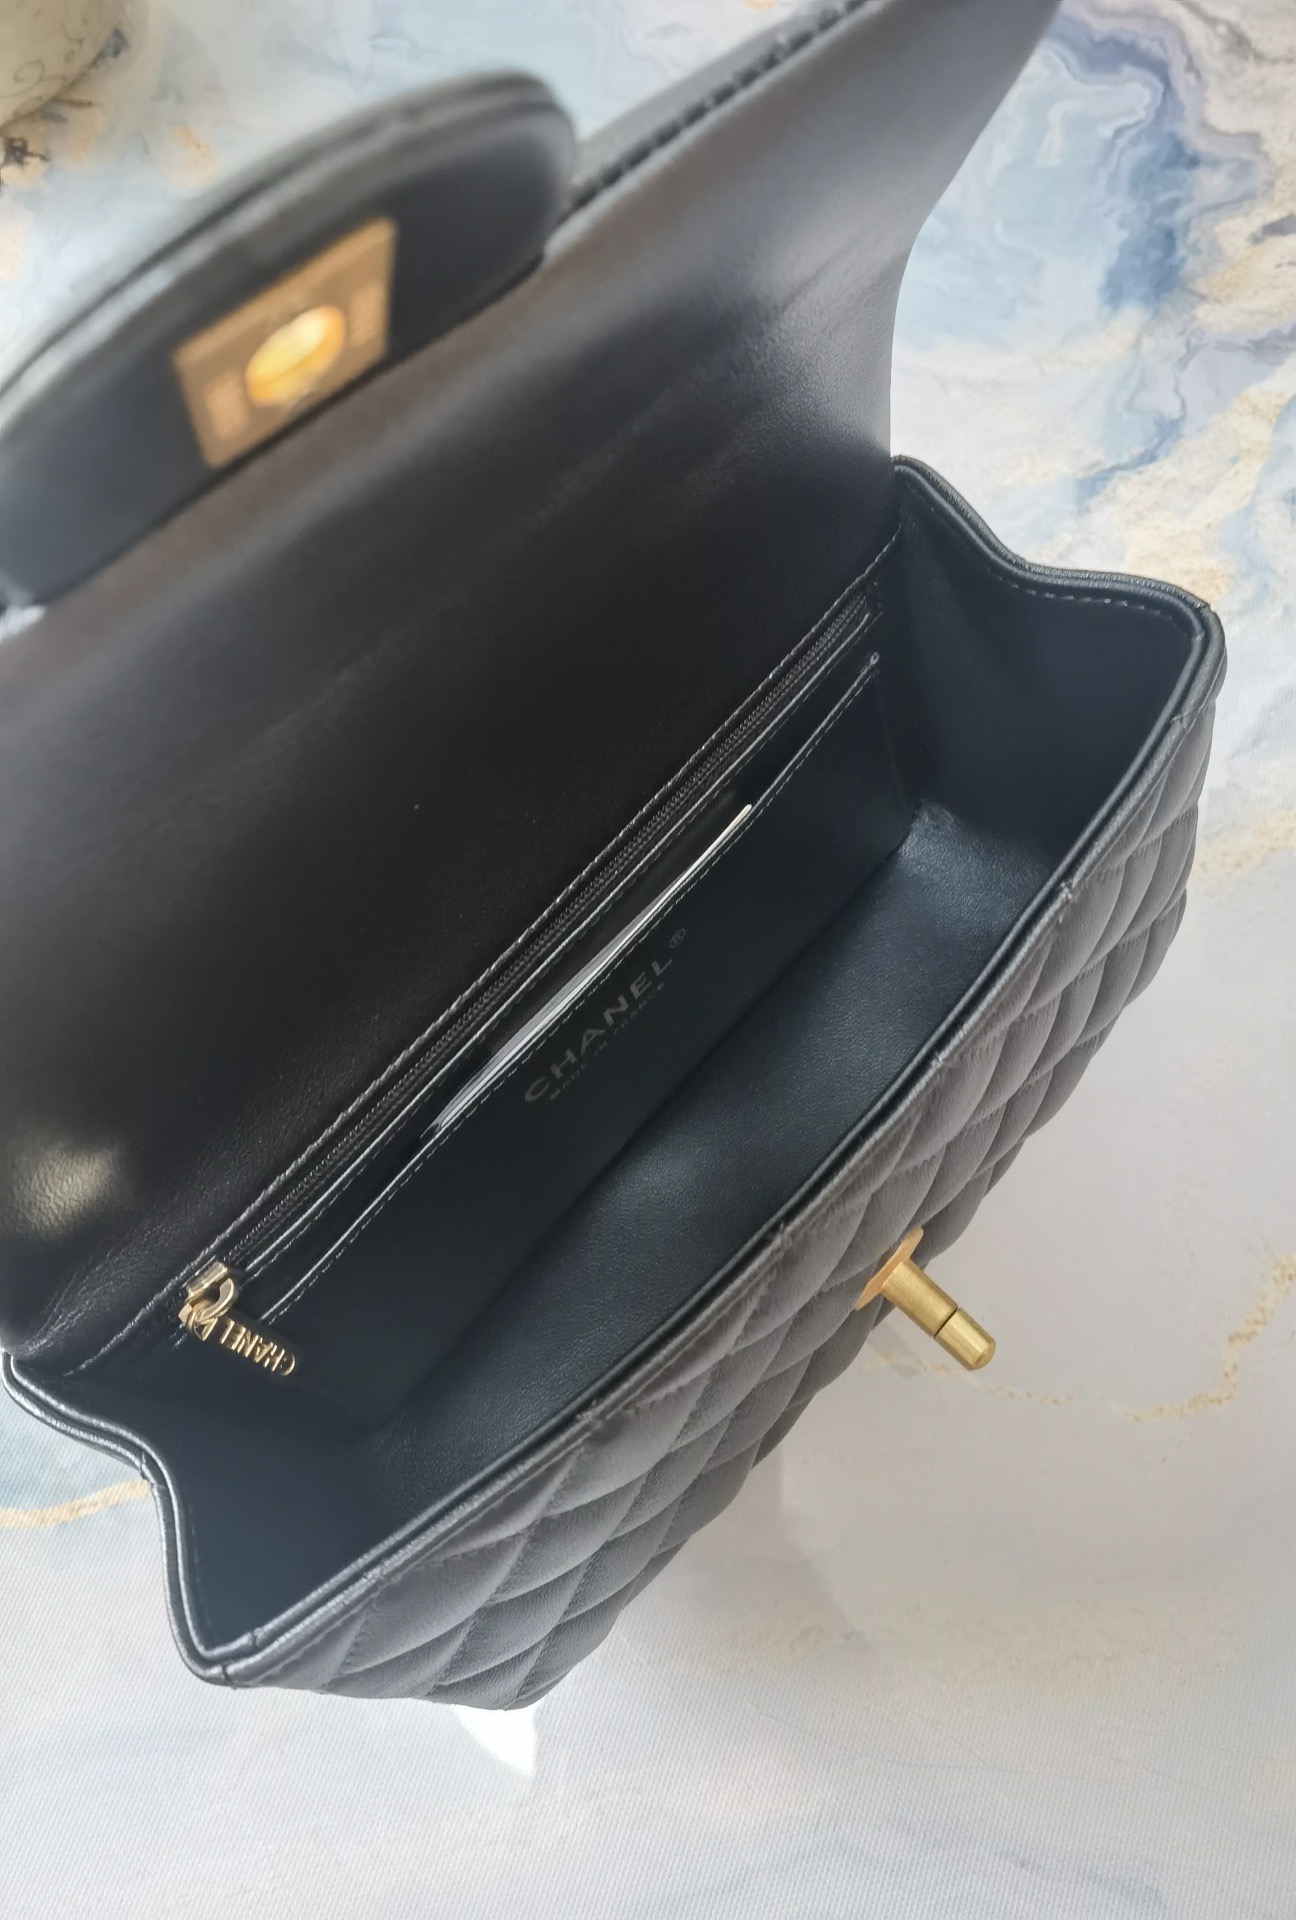 vintage chanel purse box